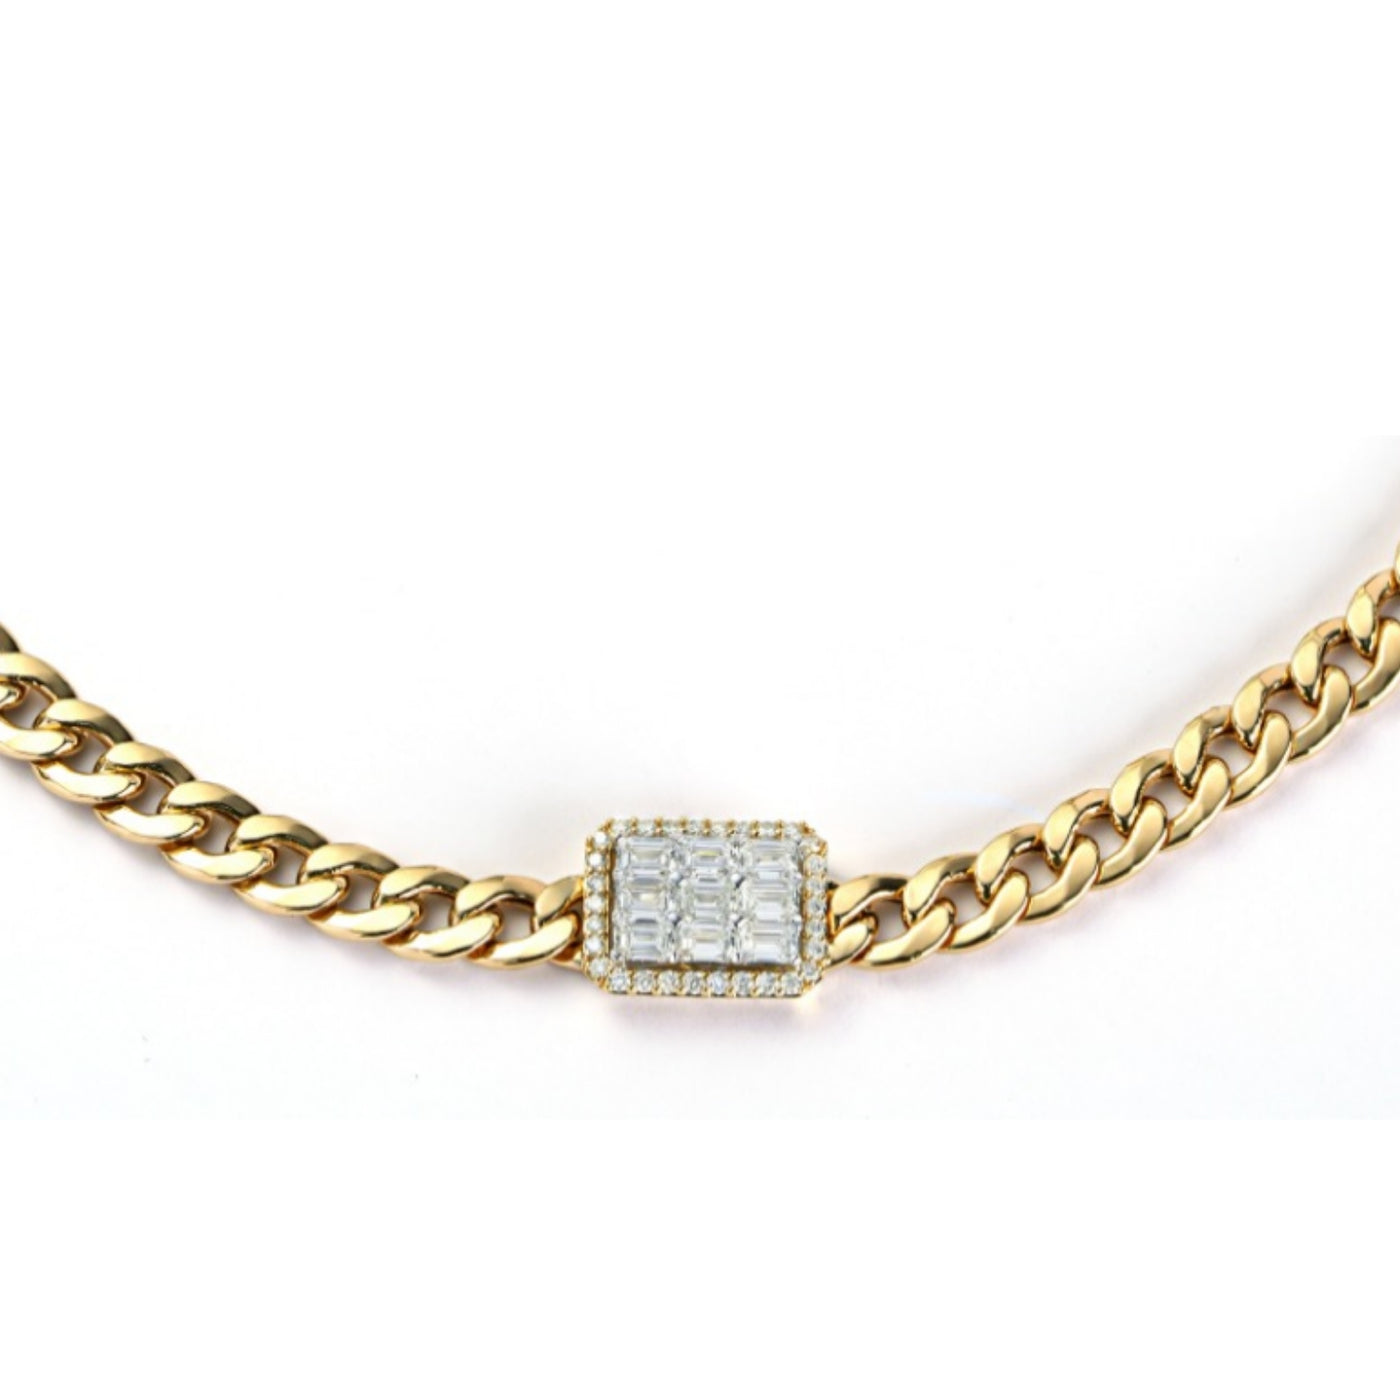 Leslie Diamond necklace